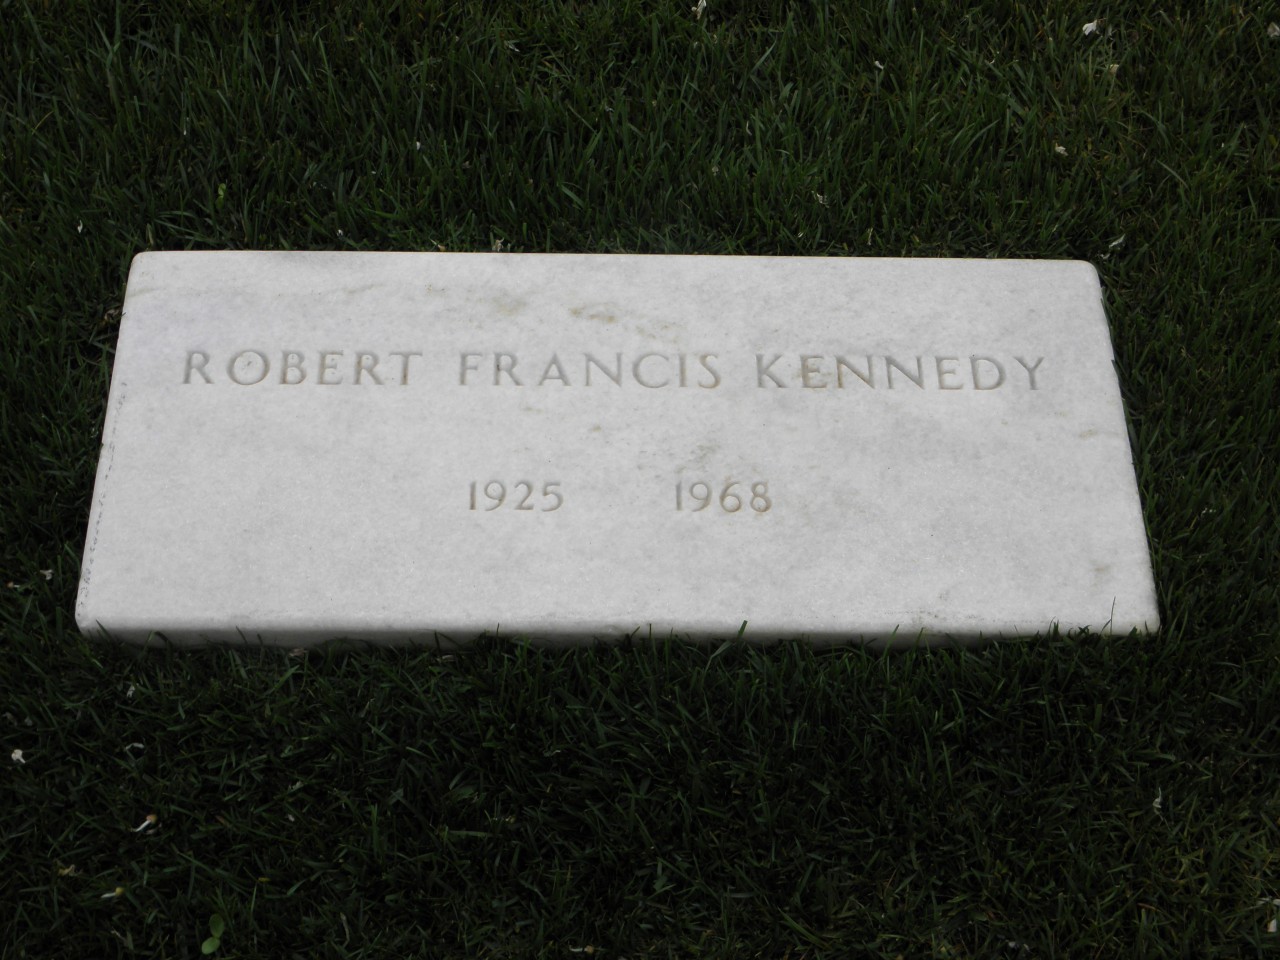 Arlington National Cemetery – Robert Francis Kennedy